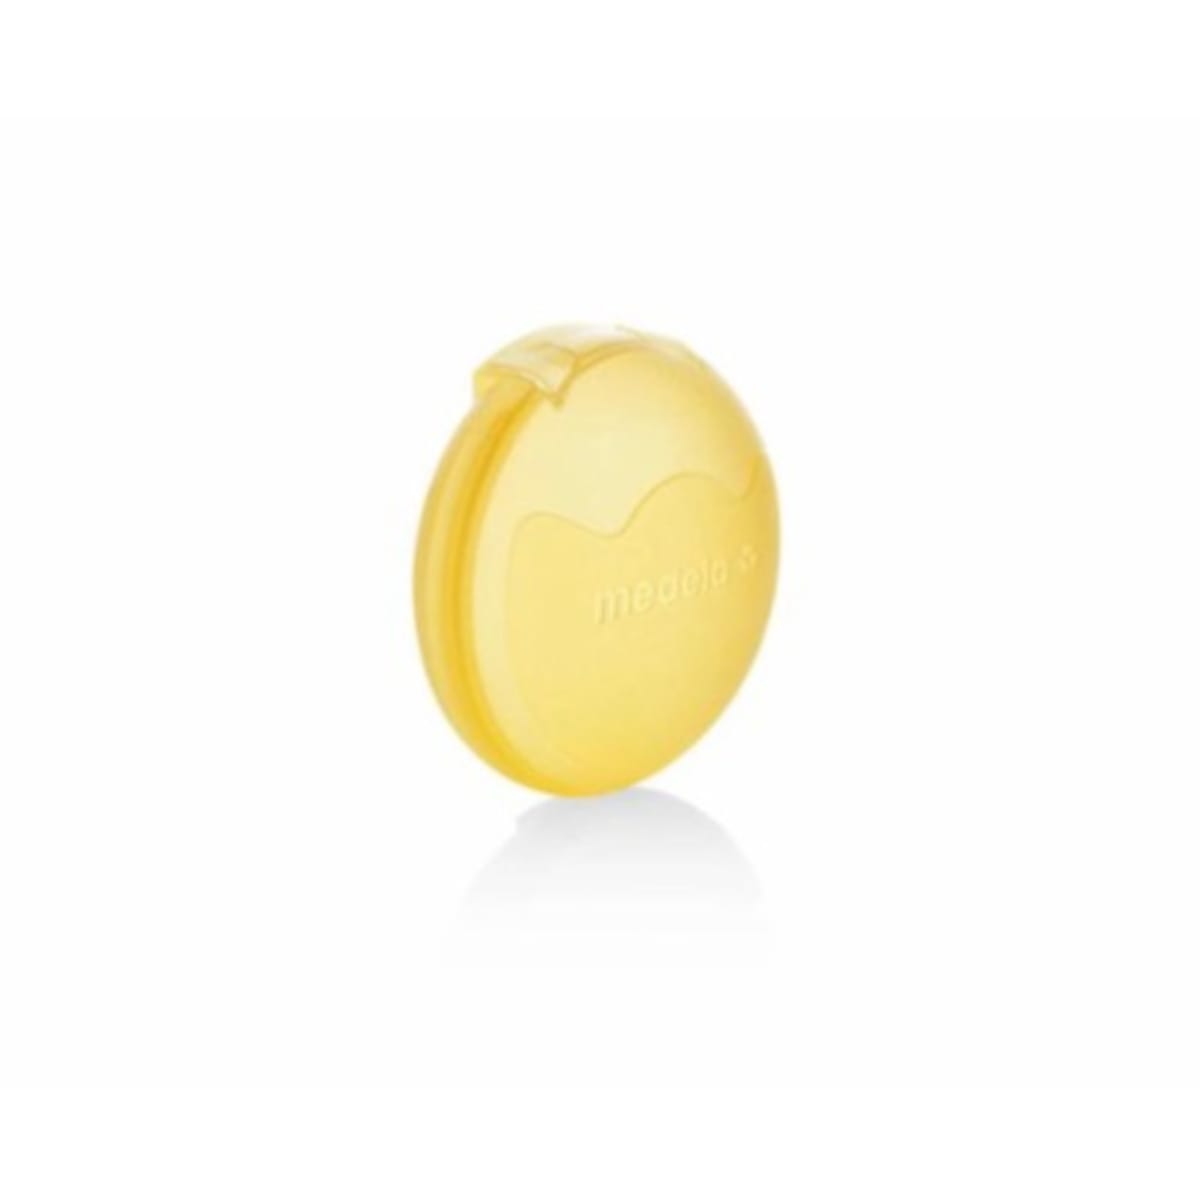 Medela Contact Nipple Shield, Small (20mm)